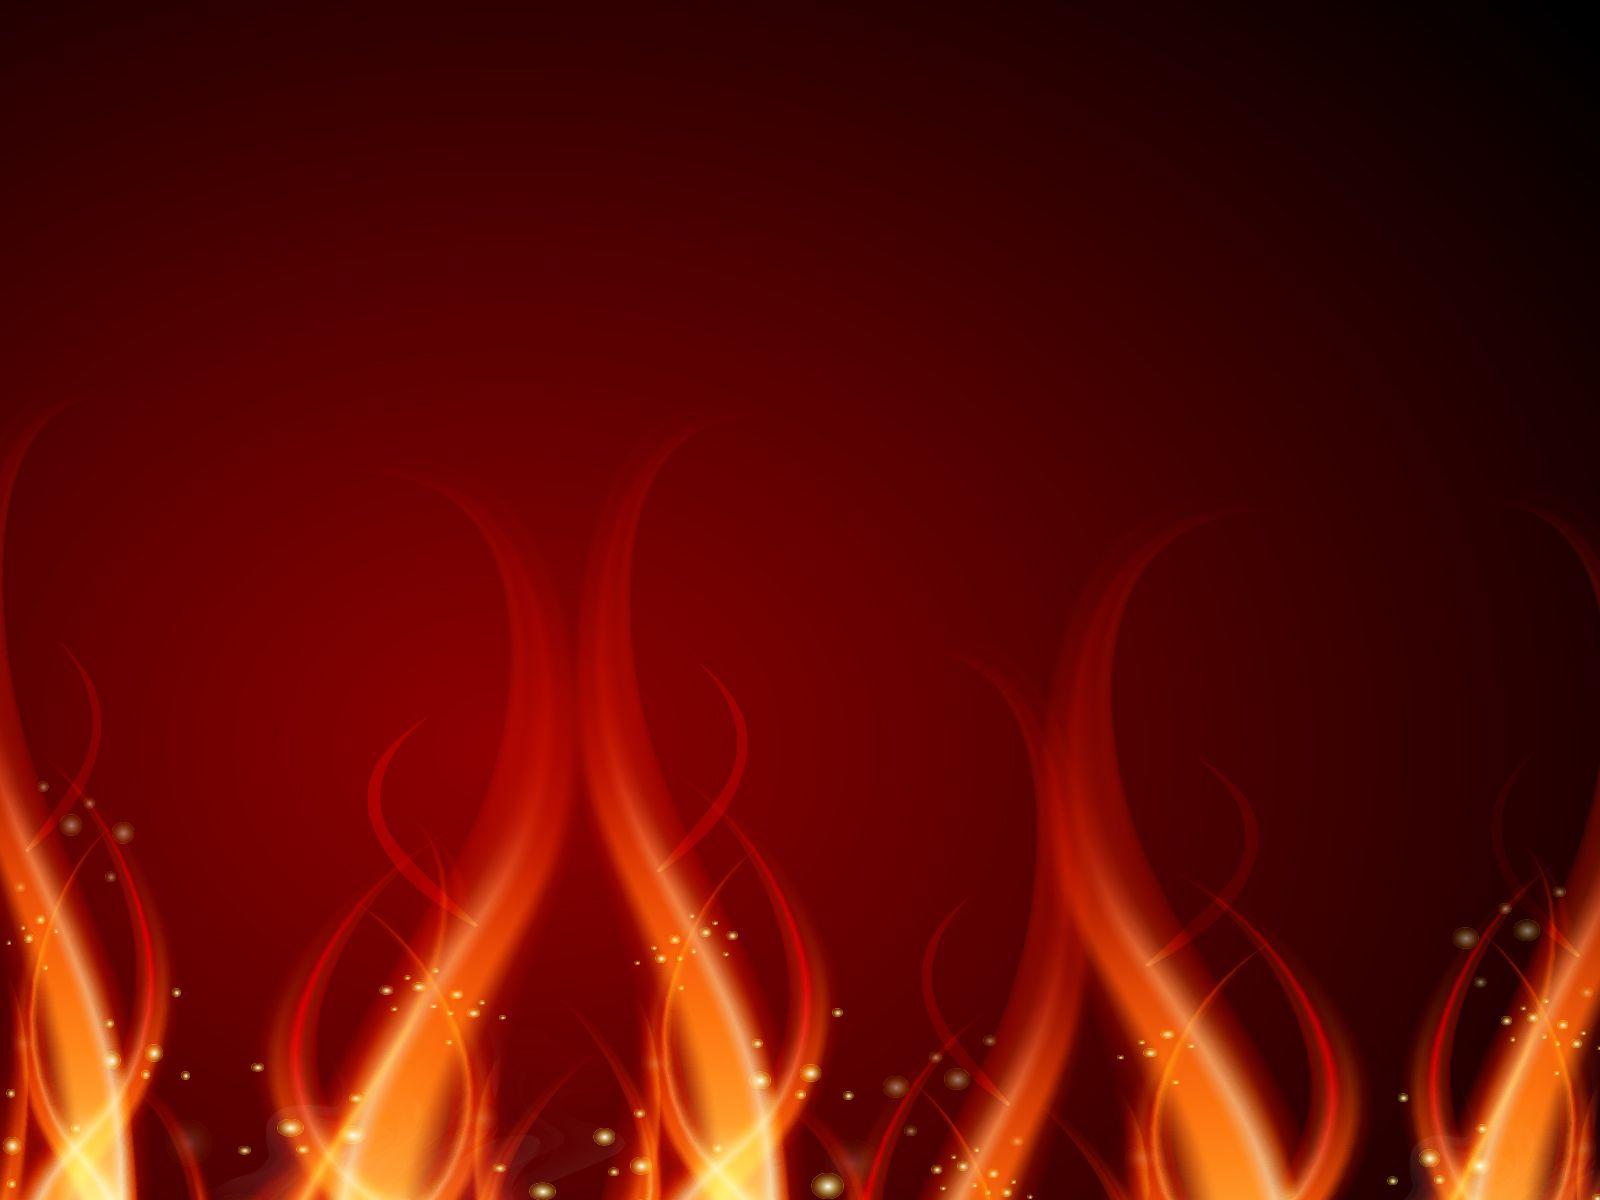 Fire Effect PPT Background, Black, Orange, Red